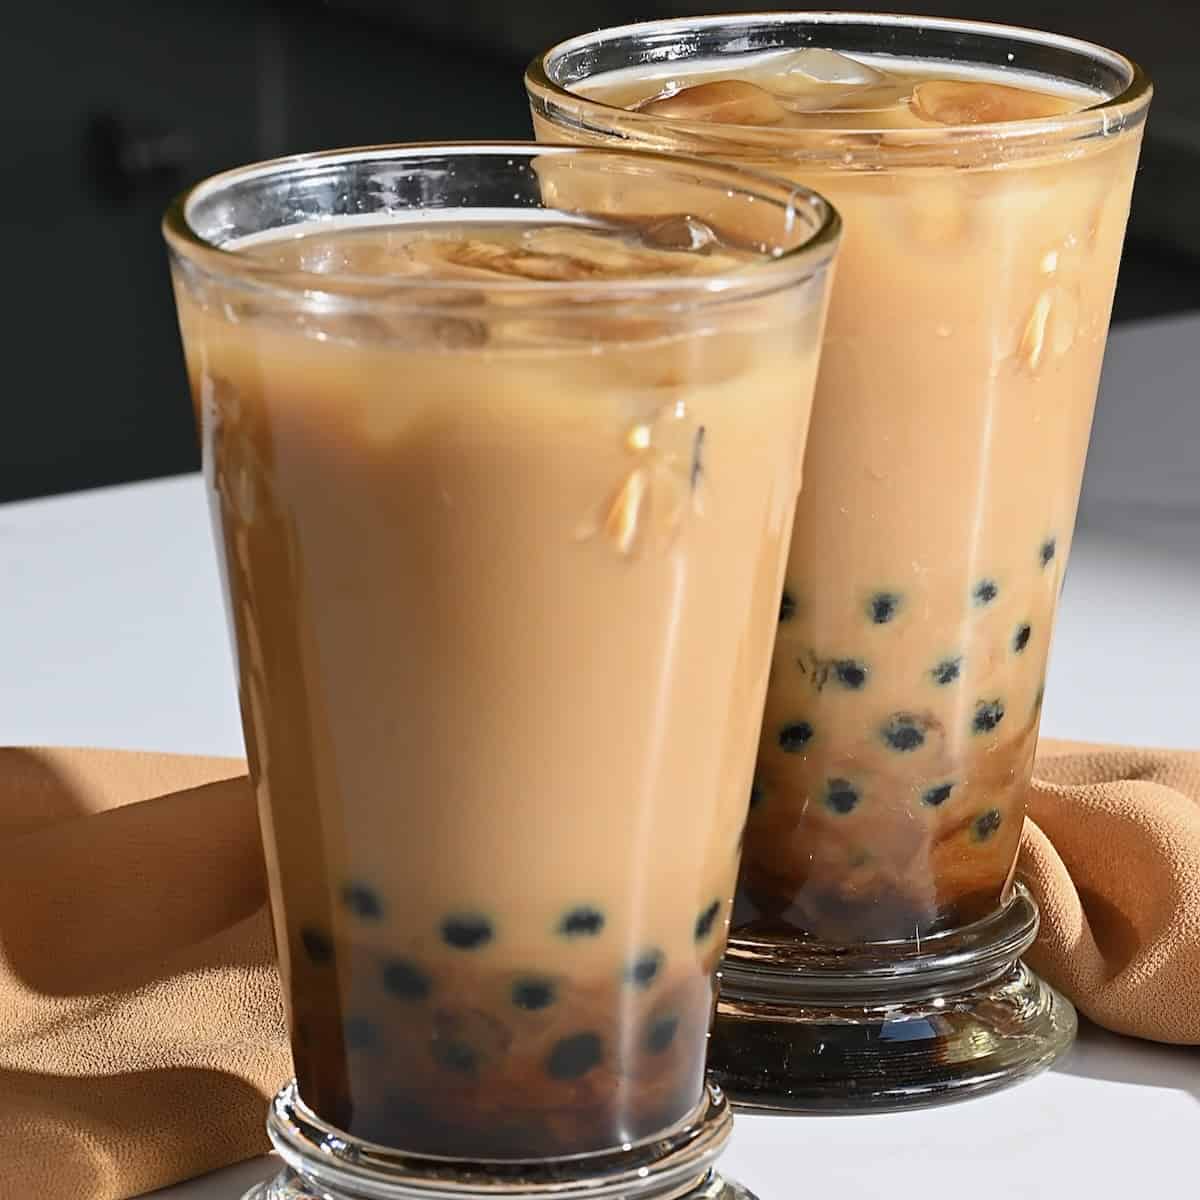 Boba Milk Tea Recipe by Tasty